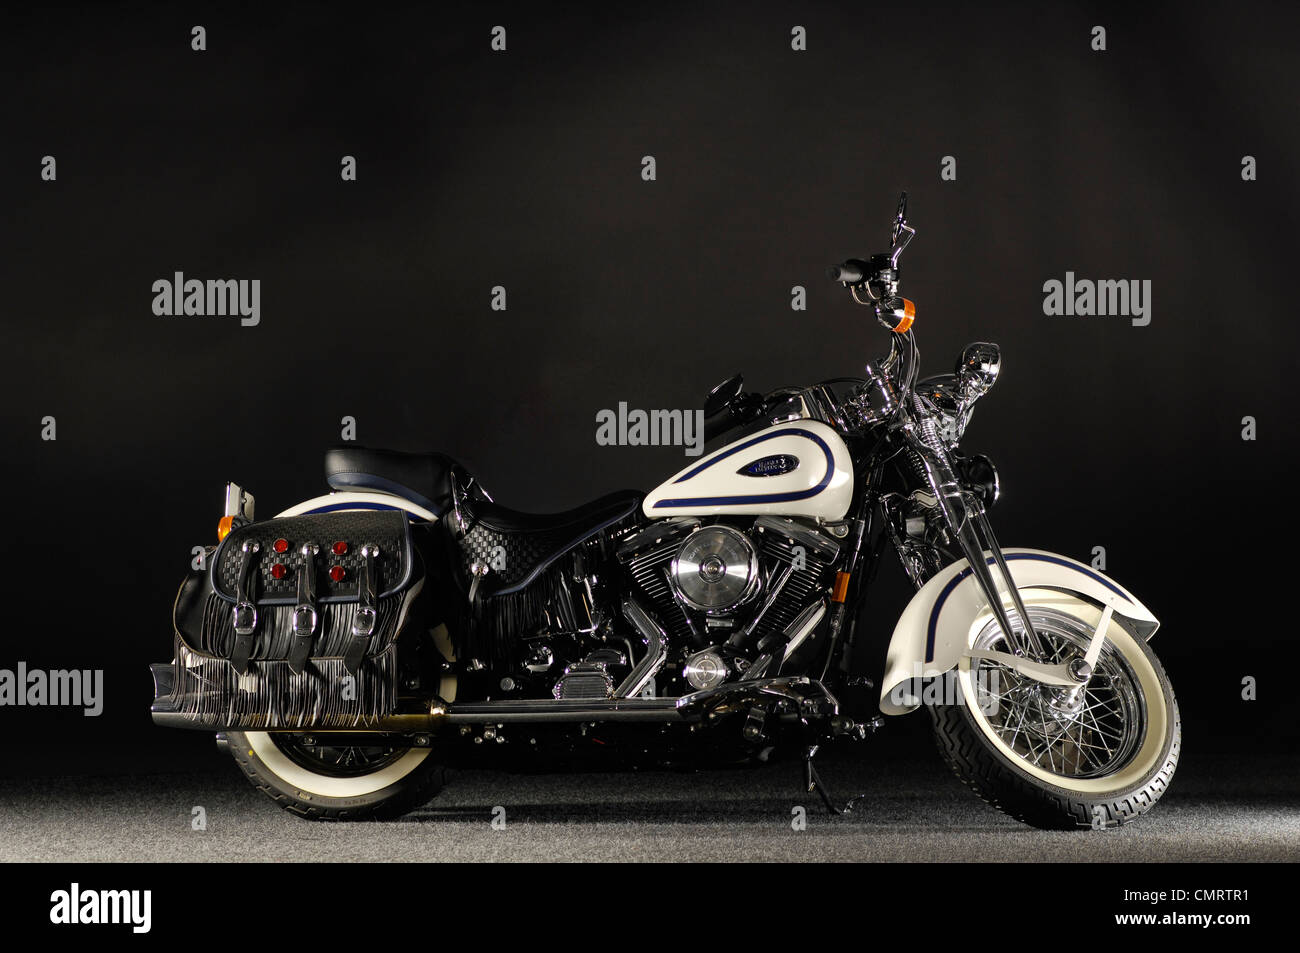 2005 Harley Davidson Soft tail Springer Stock Photo